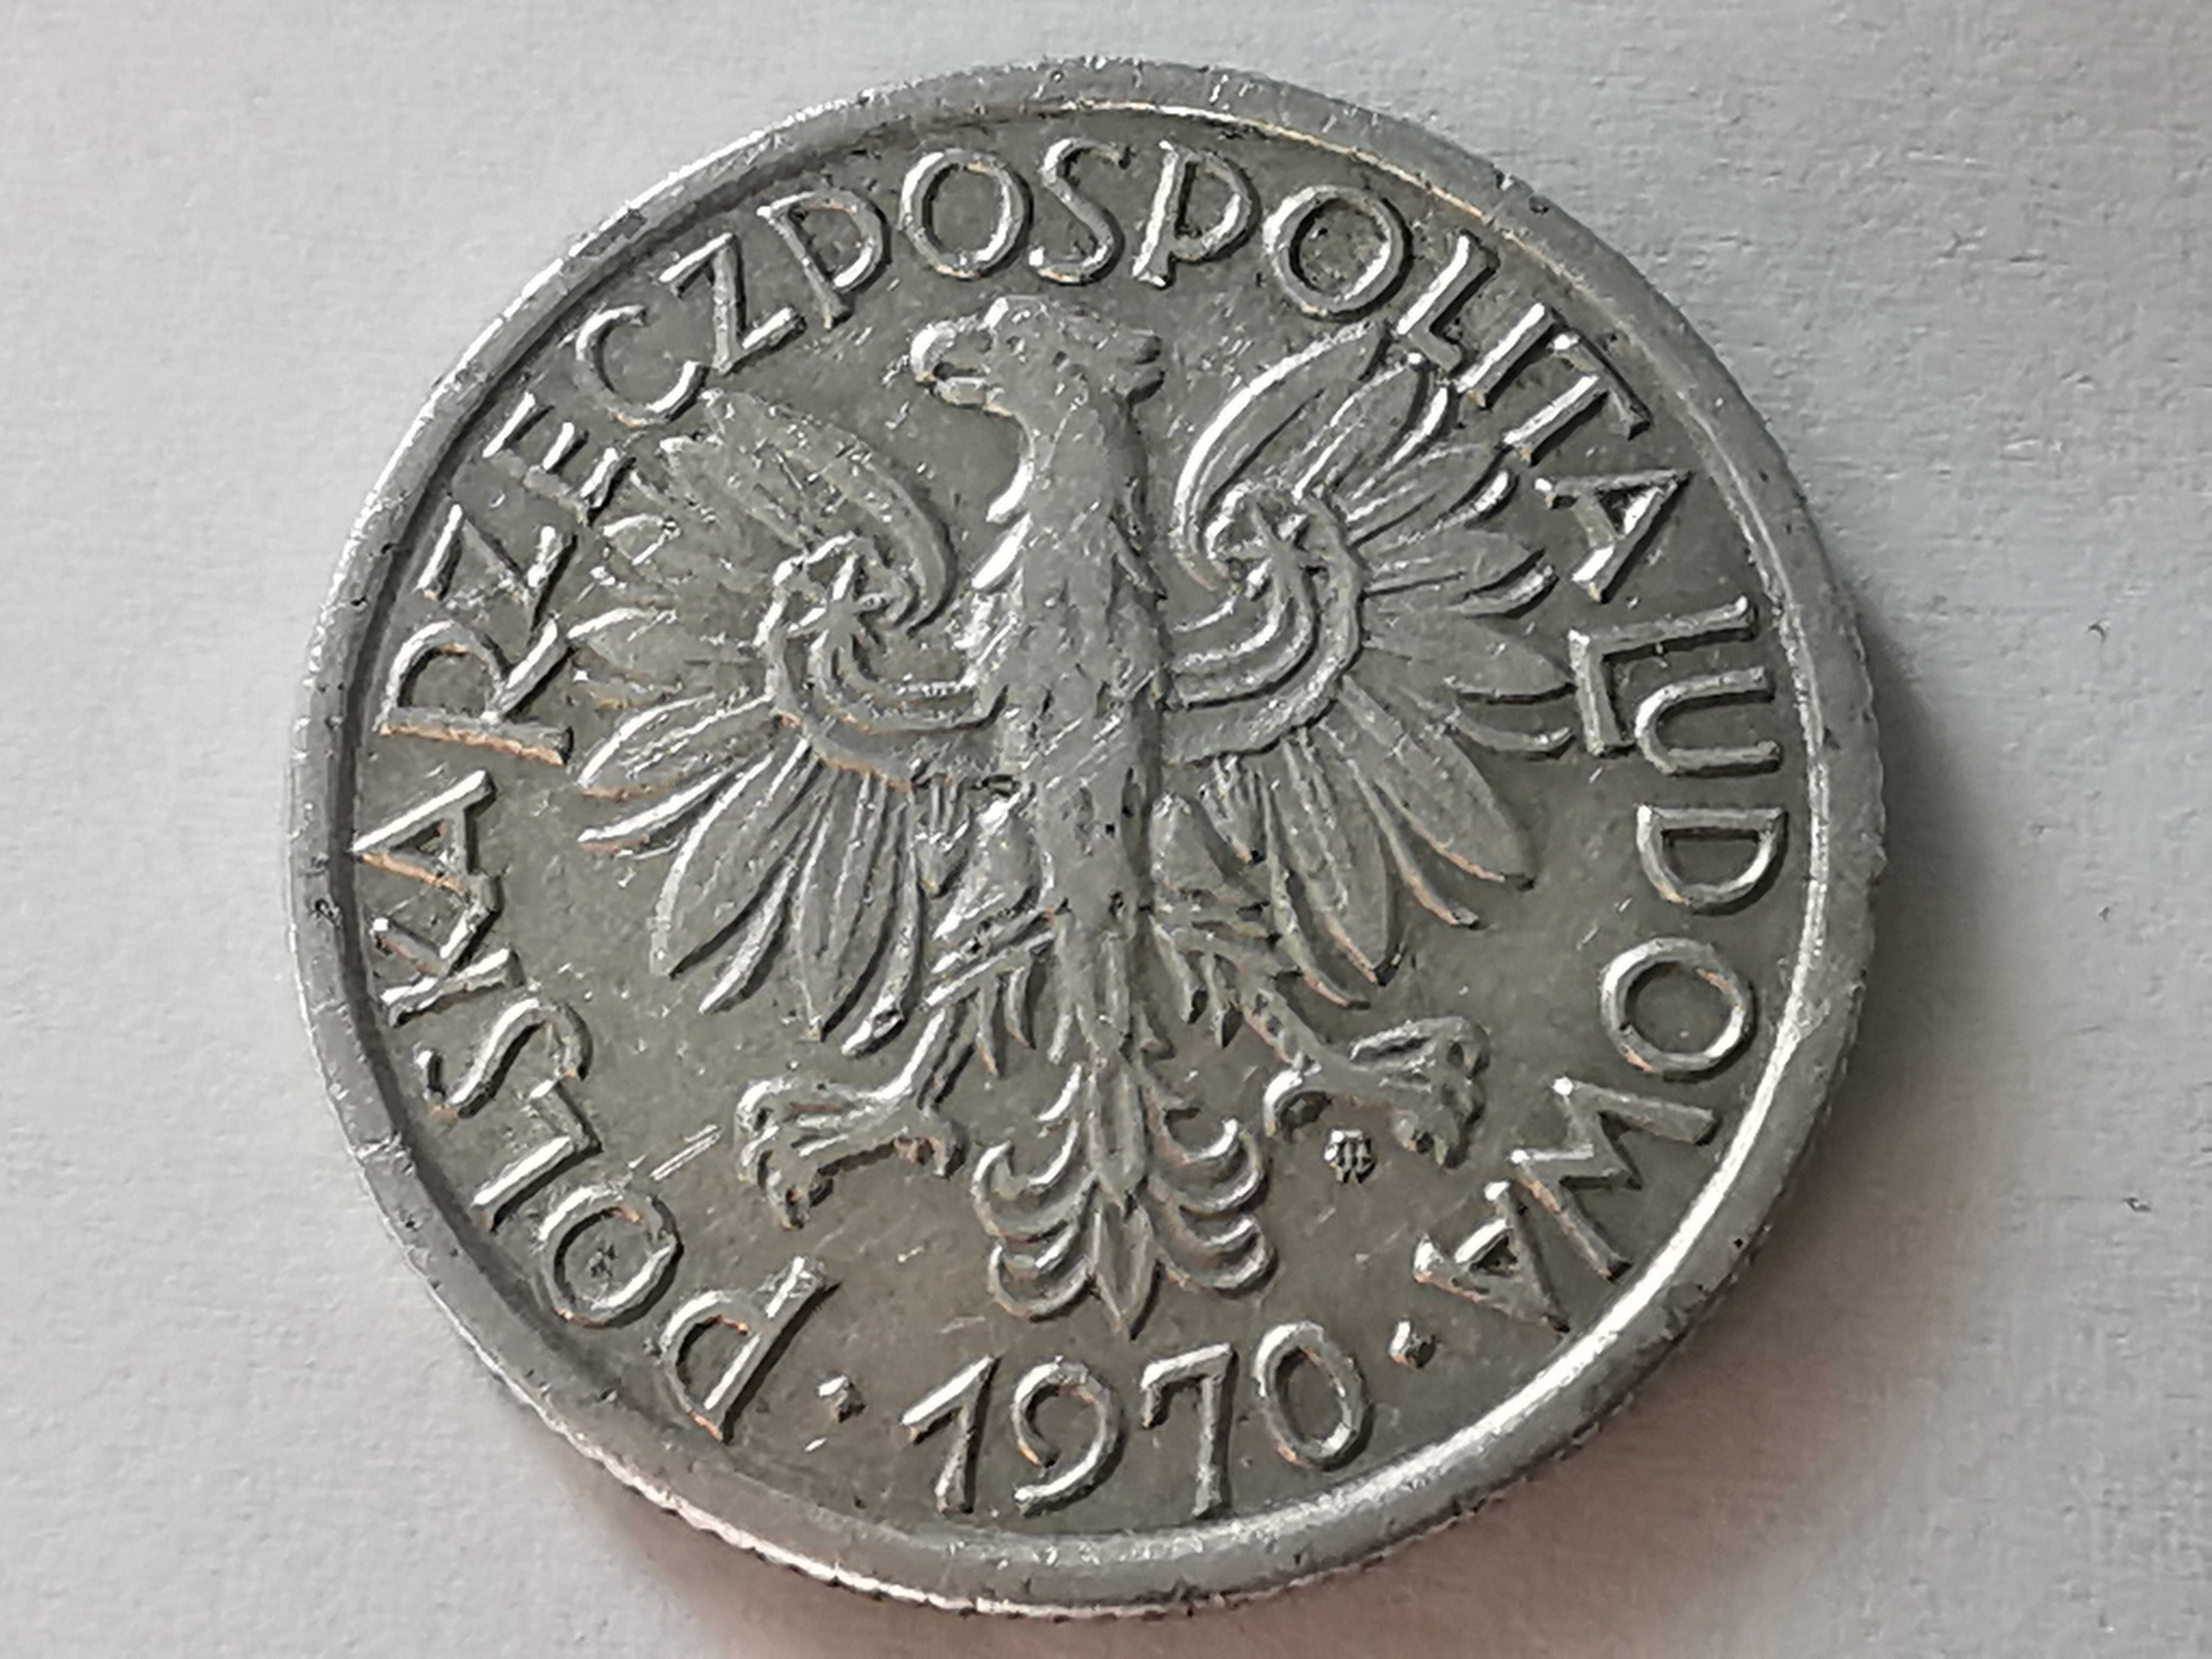 Moneta 2 zł 1970 Jagody i Kłosy